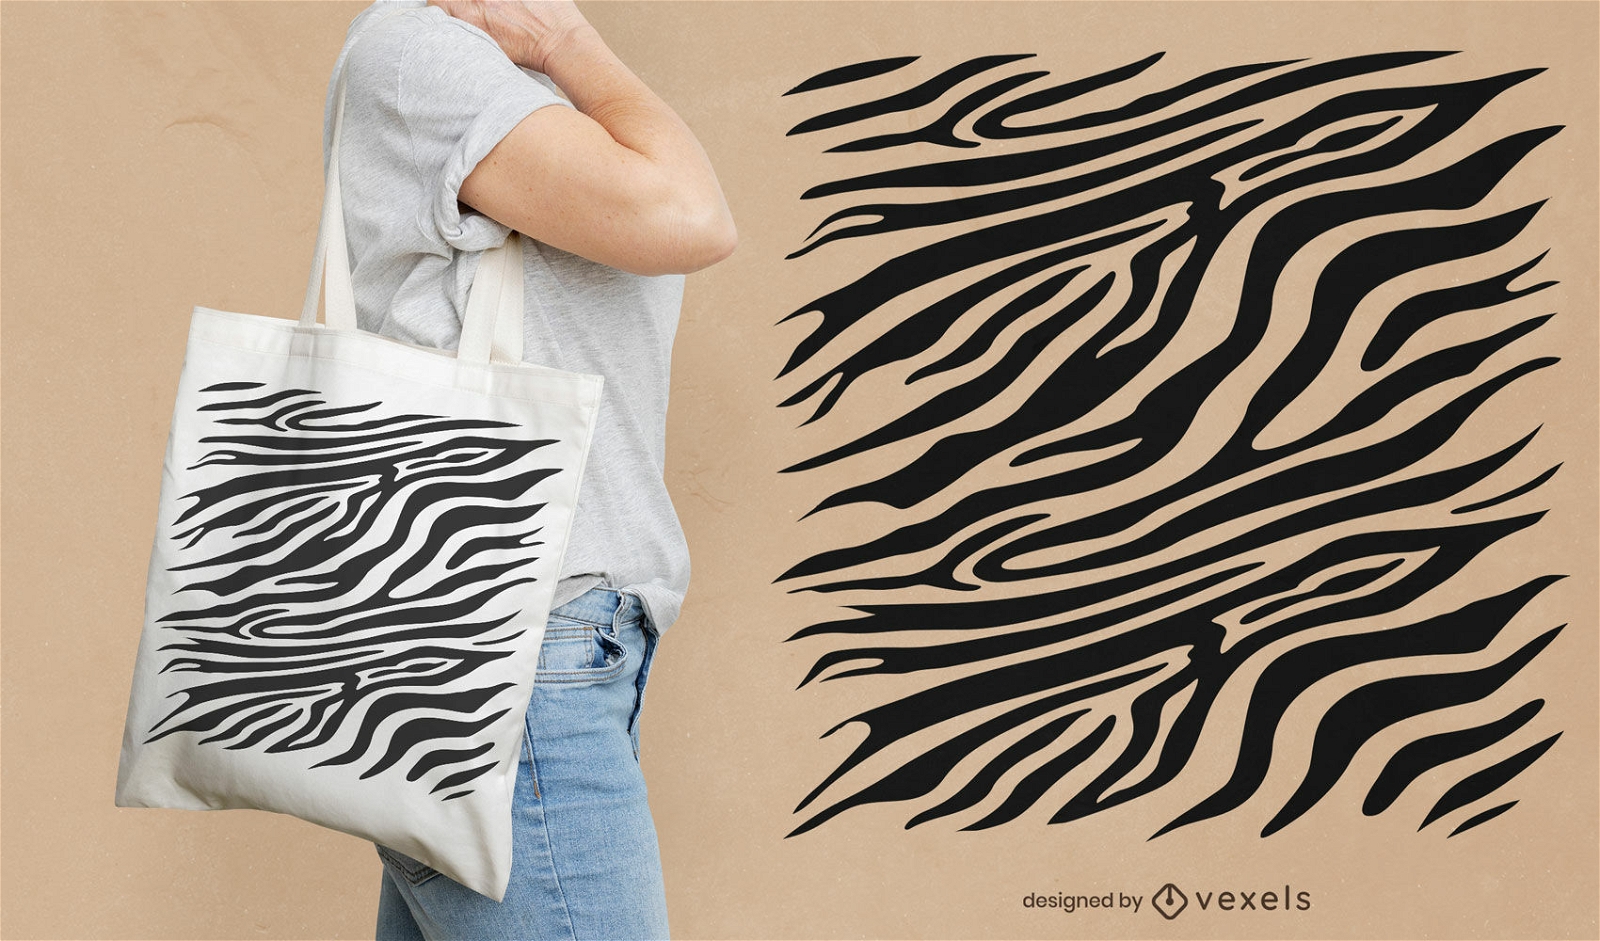 Zebra pattern on tote bag design